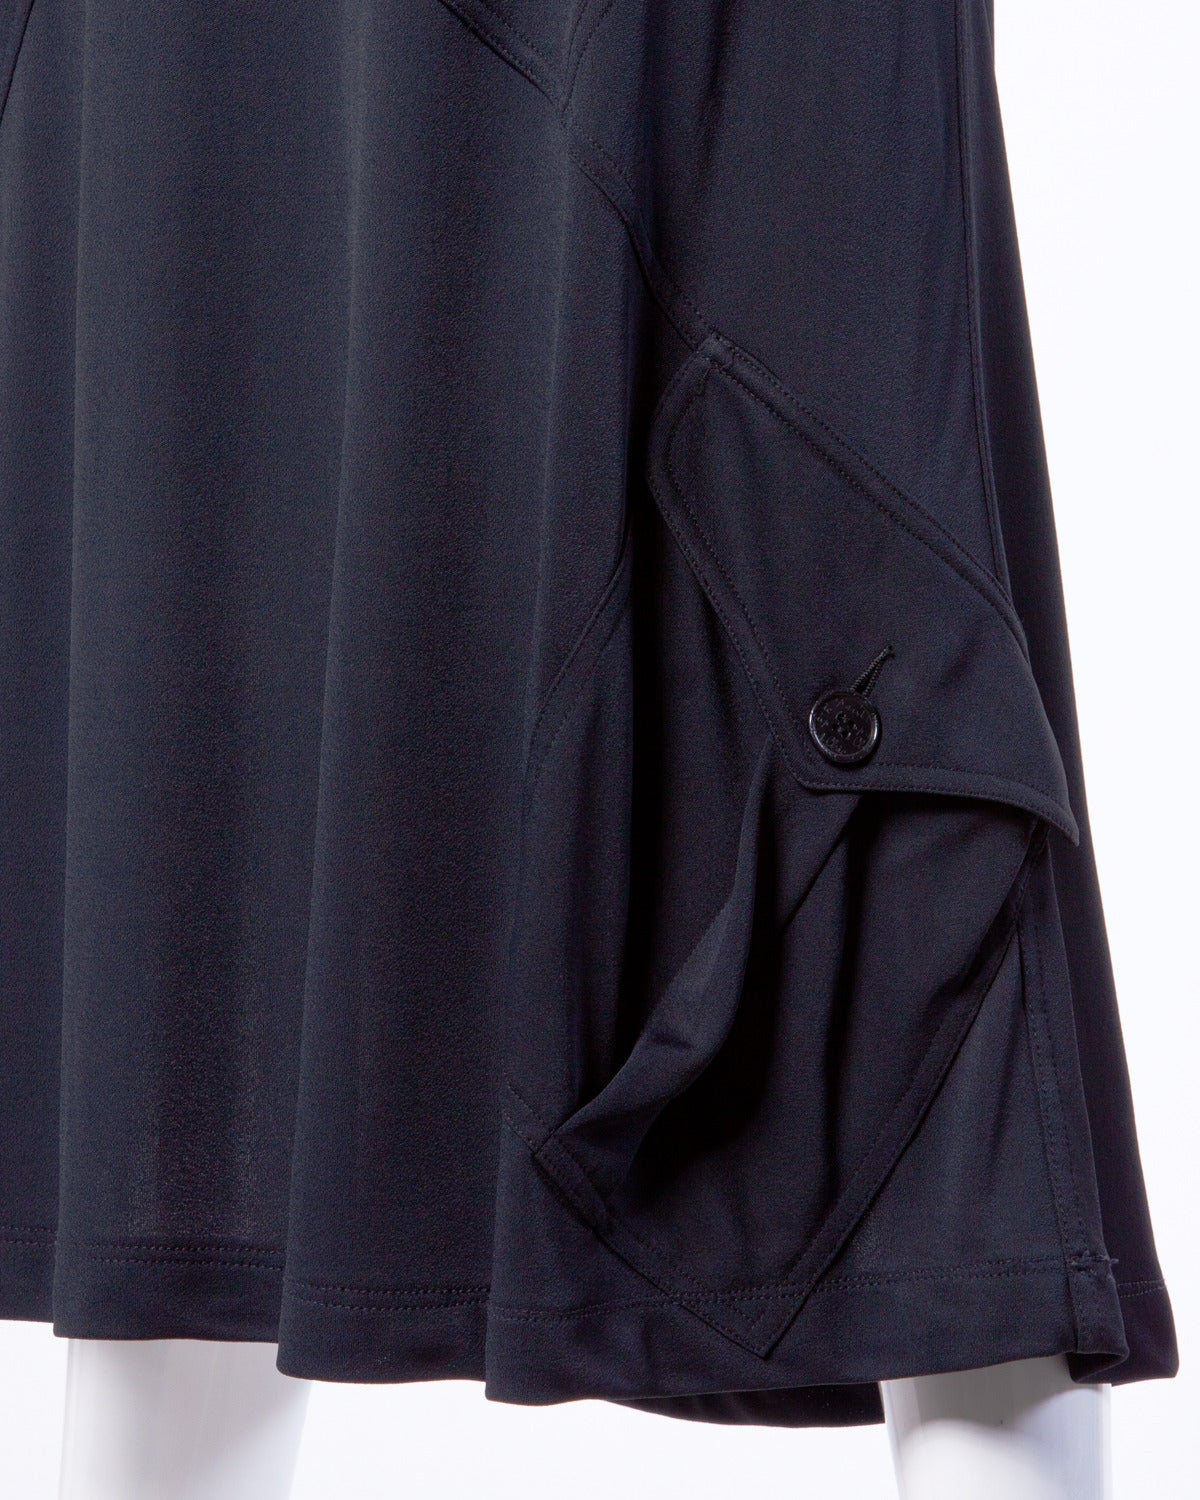 Moschino Vintage 1990s 90s Black Asymmetric Avant Garde Maxi Dress 2